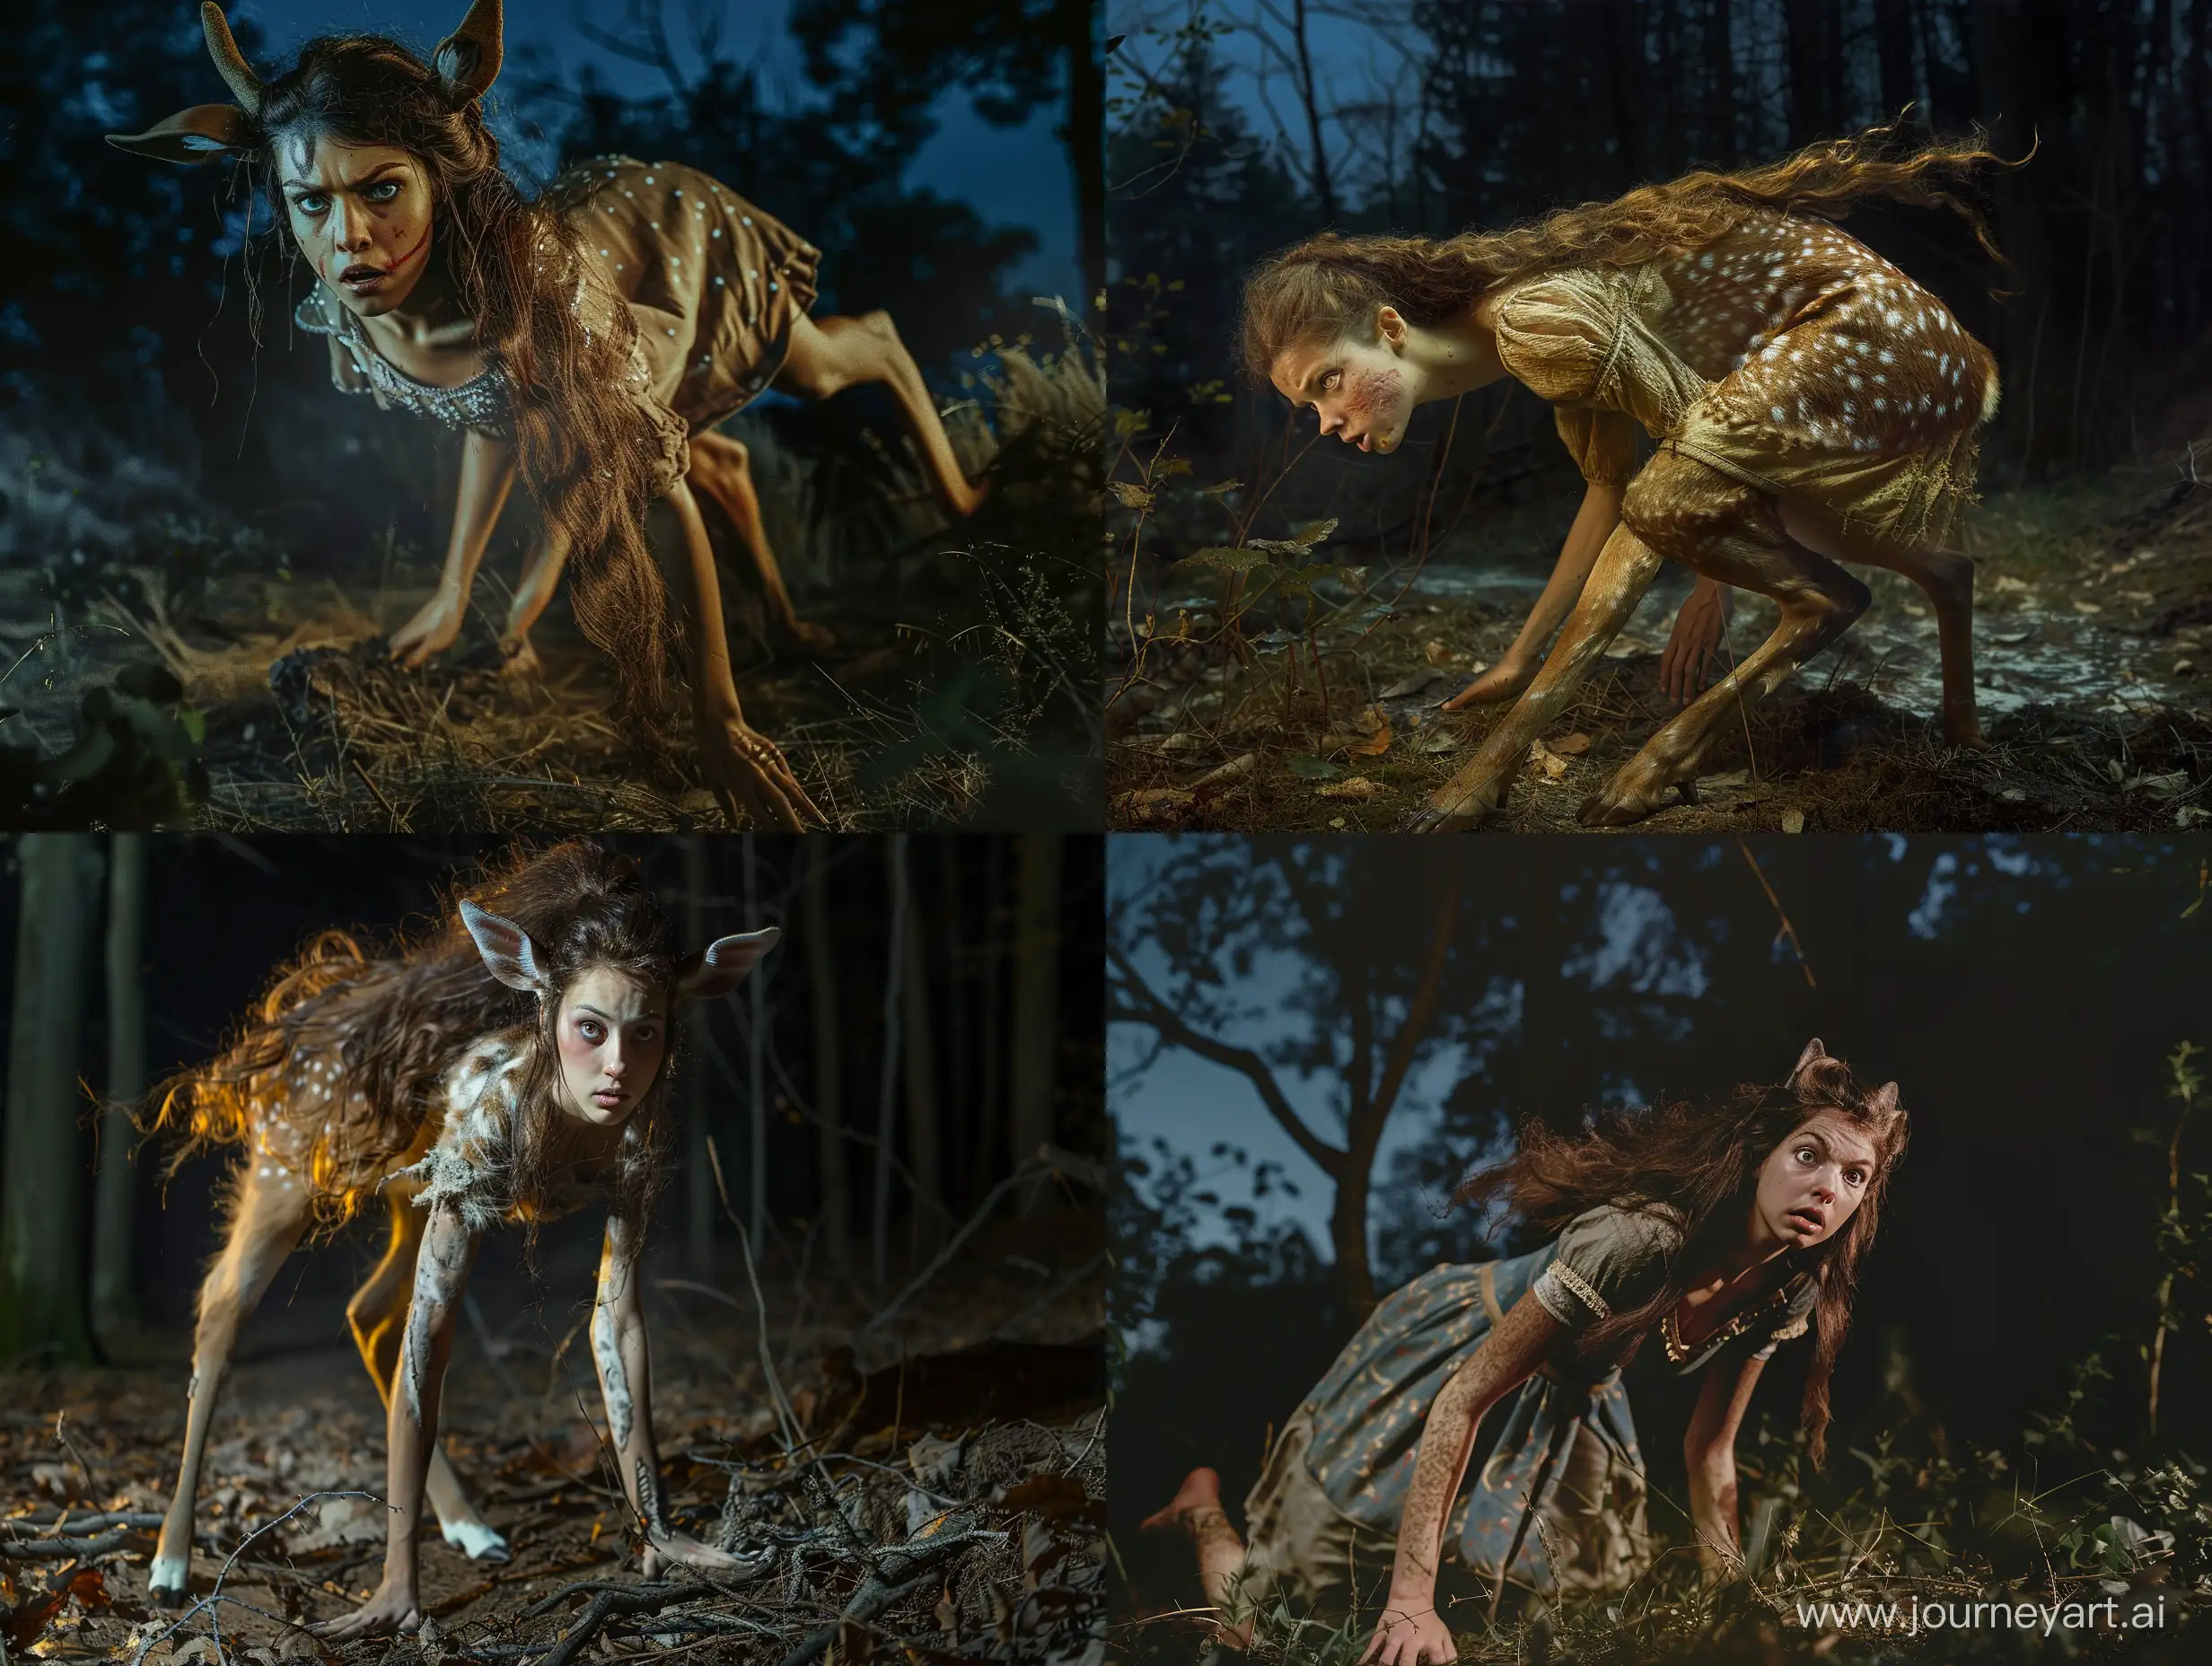 Medieval-Princess-Transformation-Captivating-Night-Forest-Scene